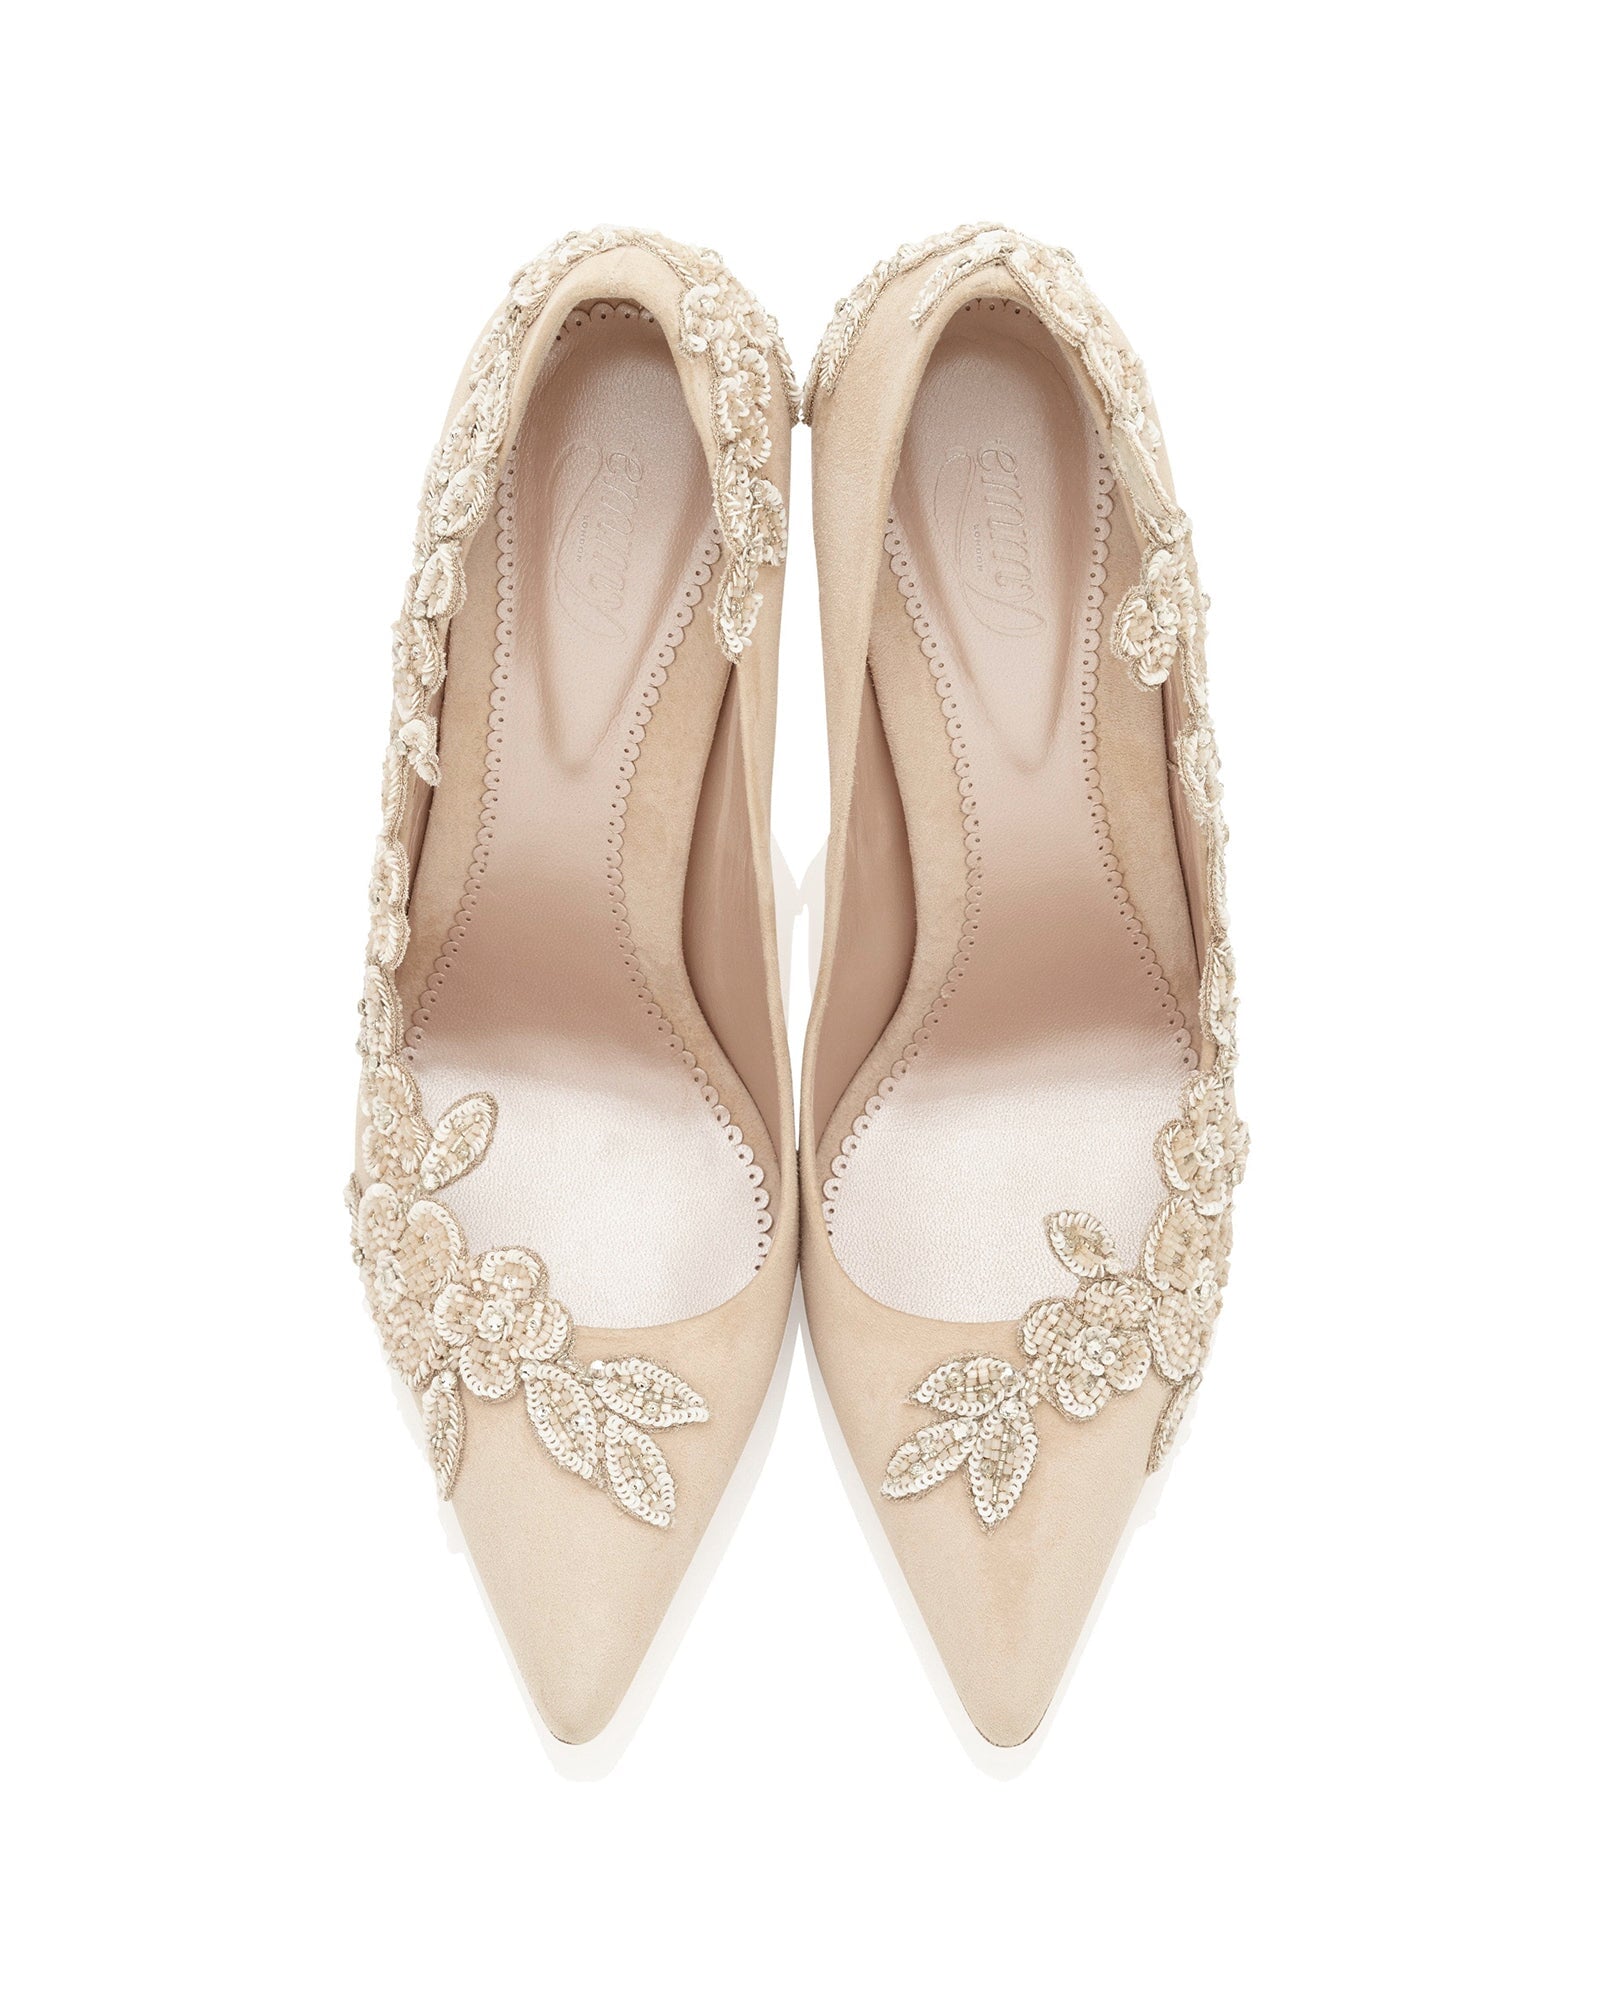 Isadora Blush Bridal Shoe Floral Embellished Blush Shoes  image